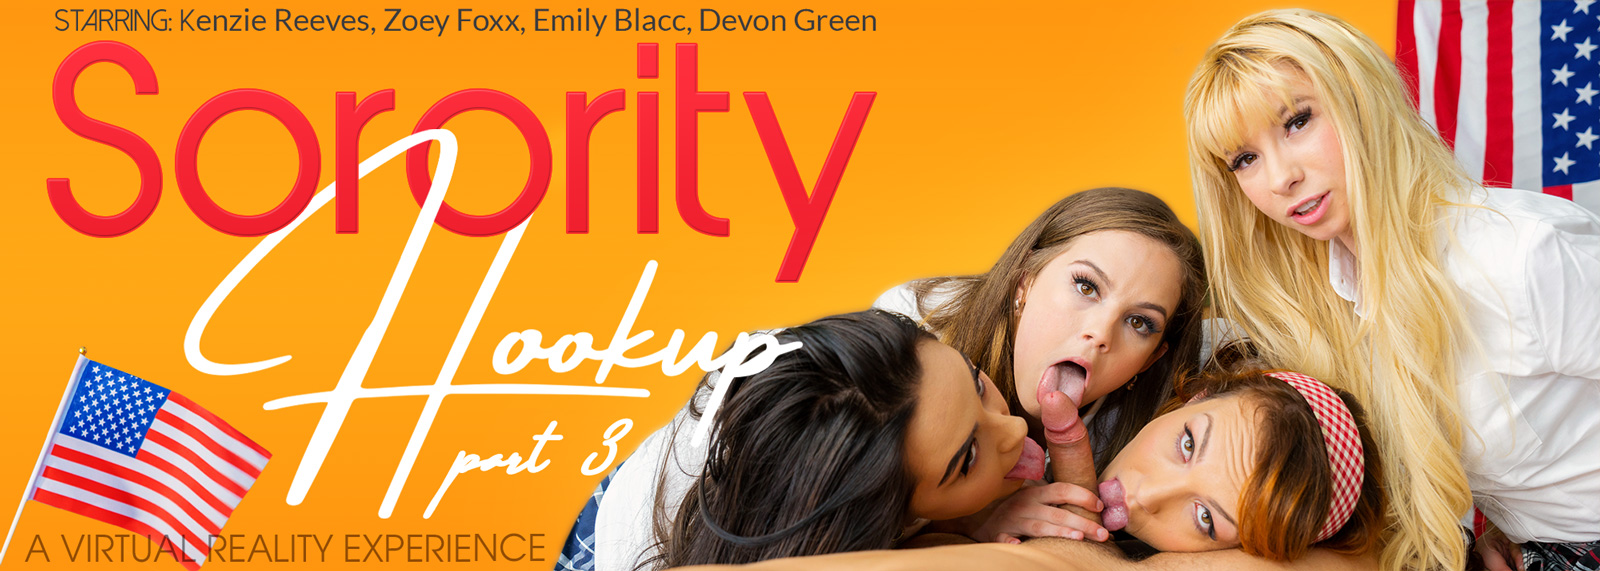 Sorority Hookup Part 3 - VR Porn Video, Starring: Emily Blacc, Zoey Foxx, Devon Green, Kenzie Reeves